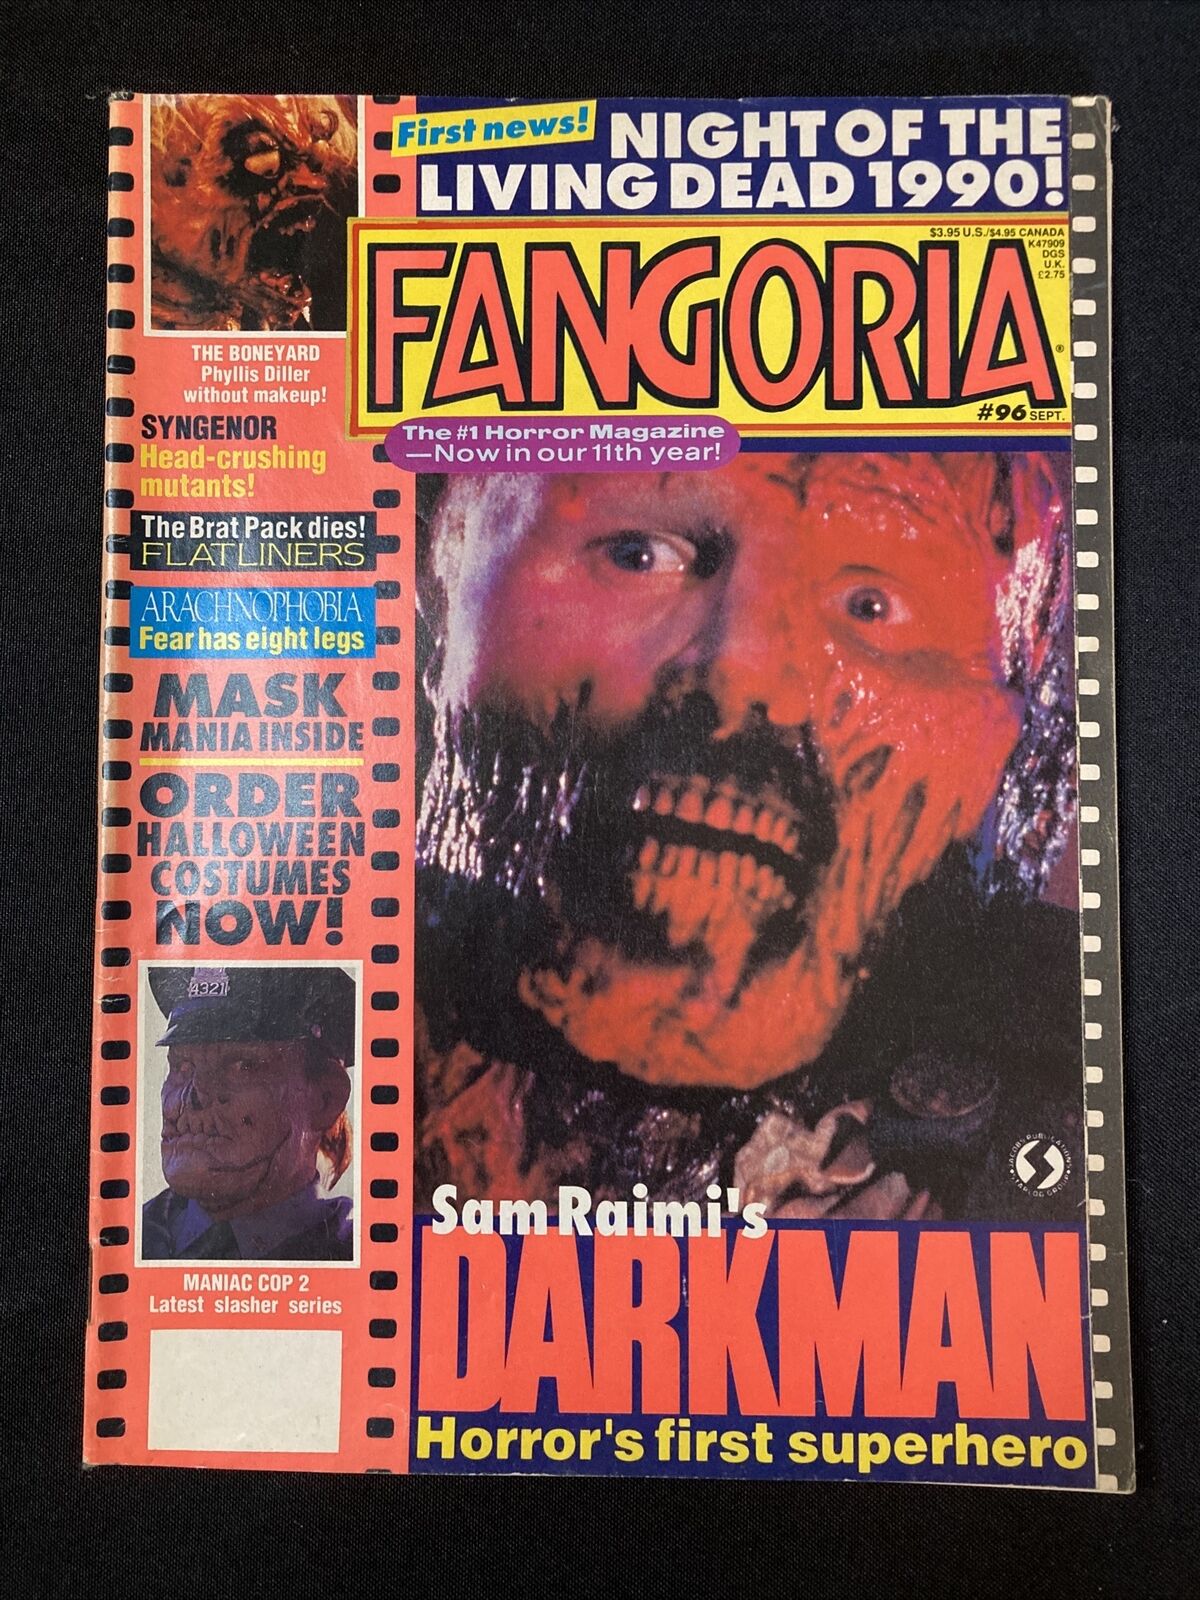 Fangoria #96 September 1990